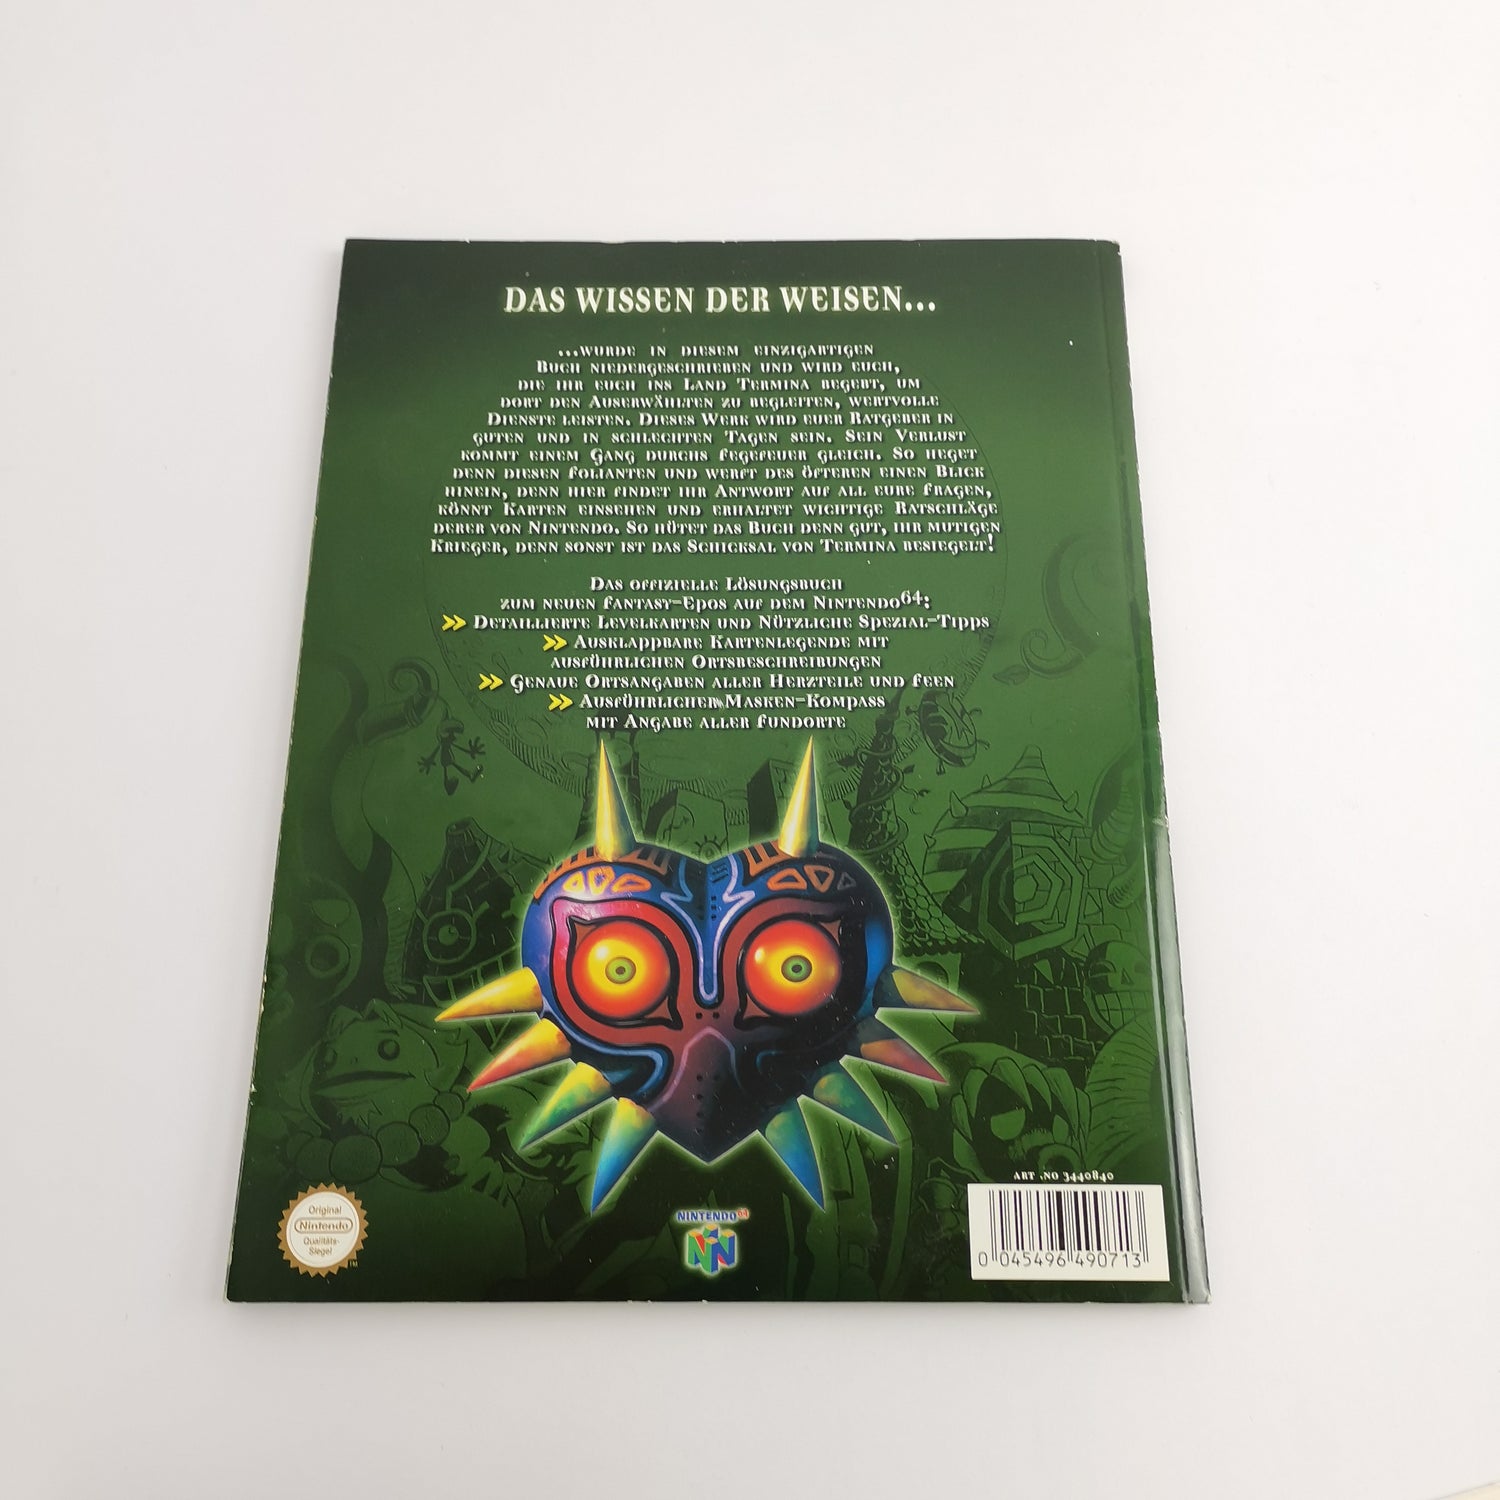 Nintendo 64 Game: The Legend of Zelda Majora's Mask + Game Advisor | N64 original packaging